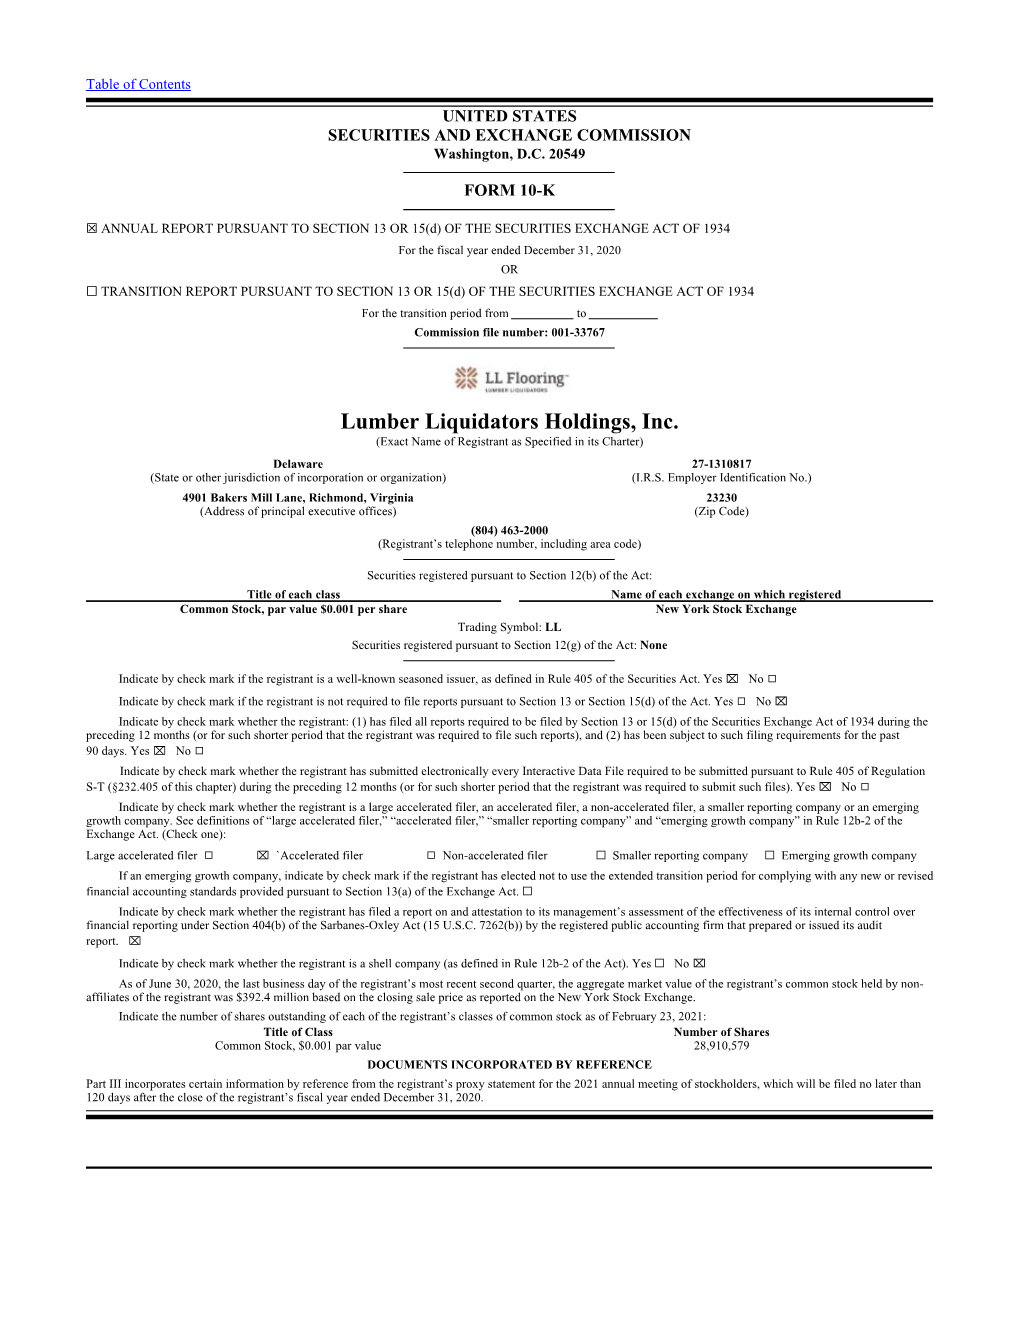 Lumber Liquidators Holdings, Inc